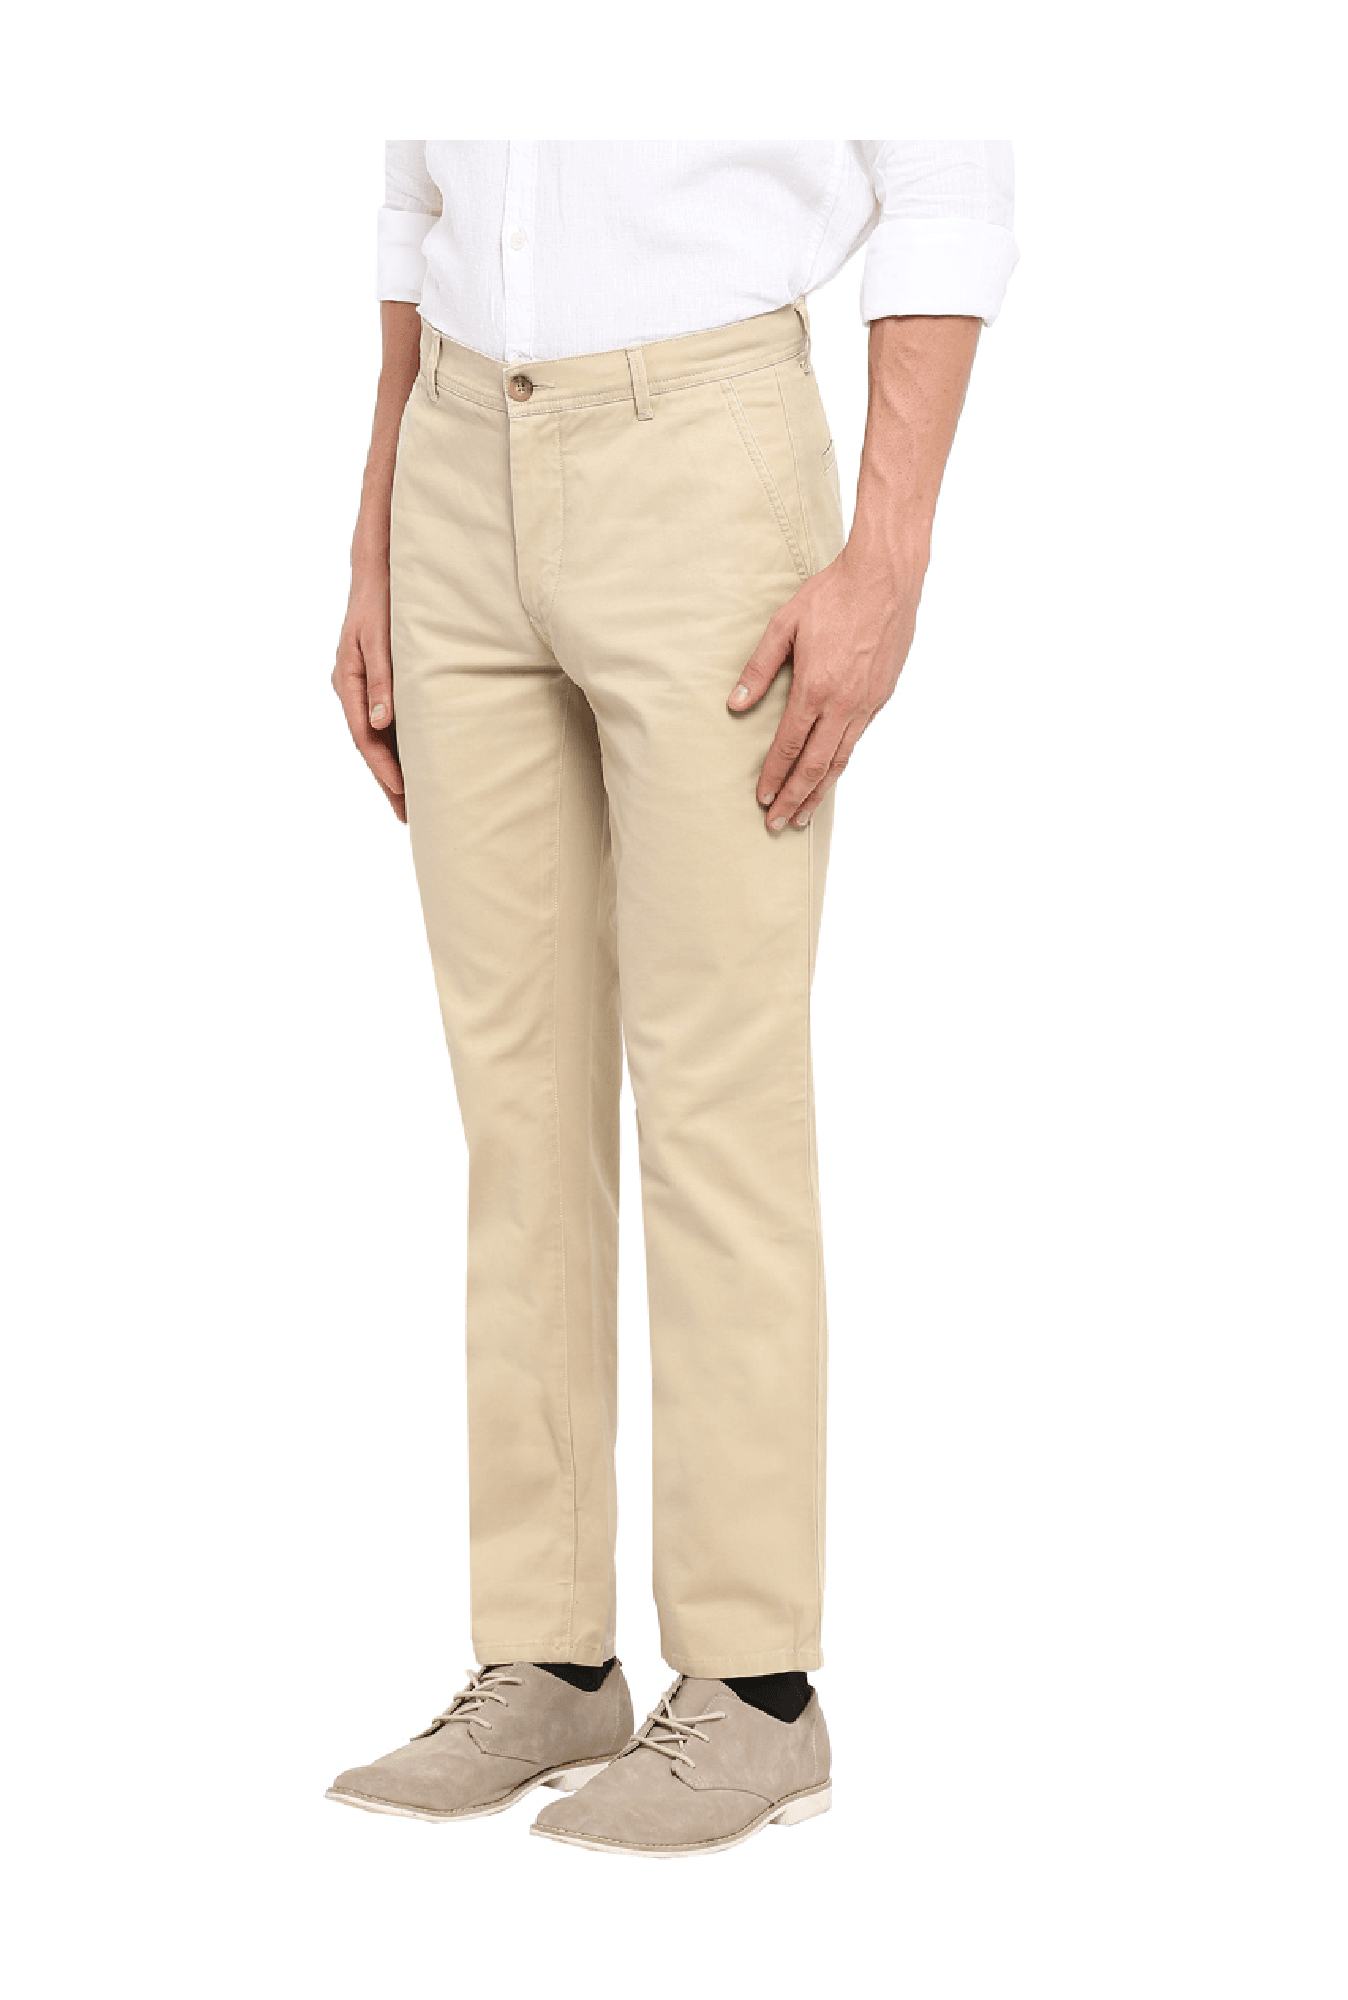 Buy Green Trousers  Pants for Men by Colorplus Online  Ajiocom